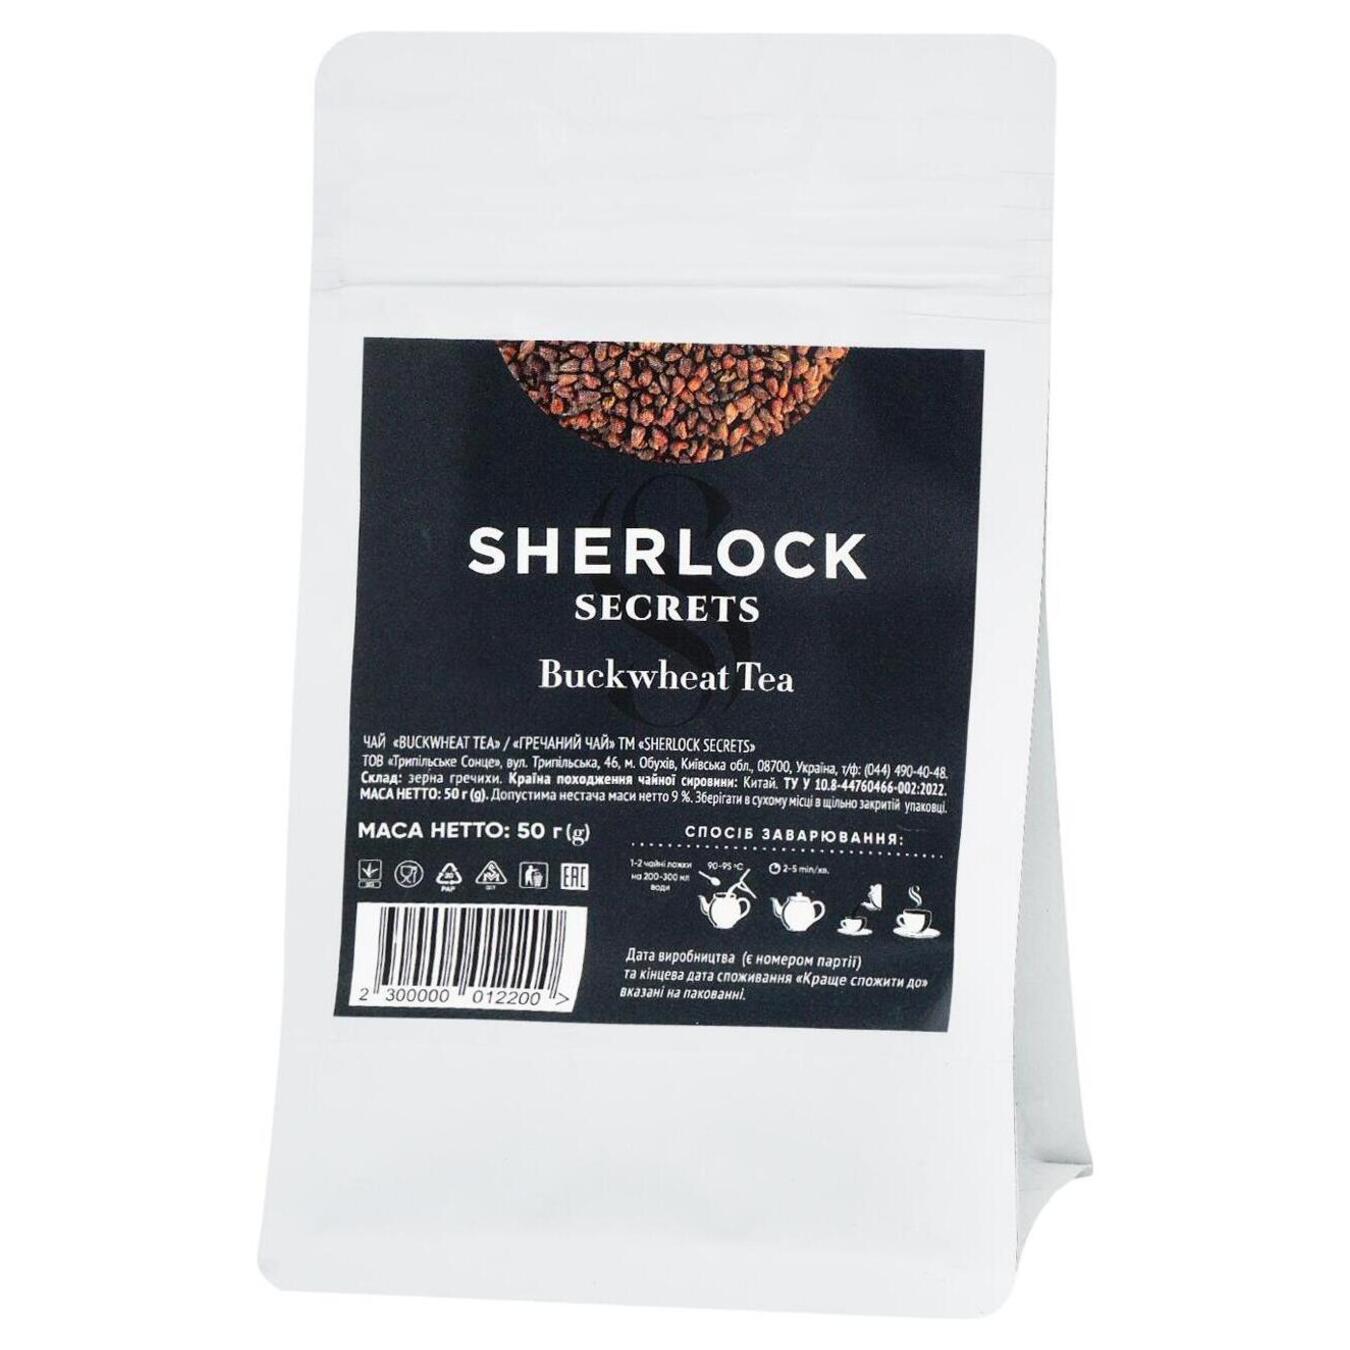 Sherlock Secrets buckwheat buckwheat tea 50g